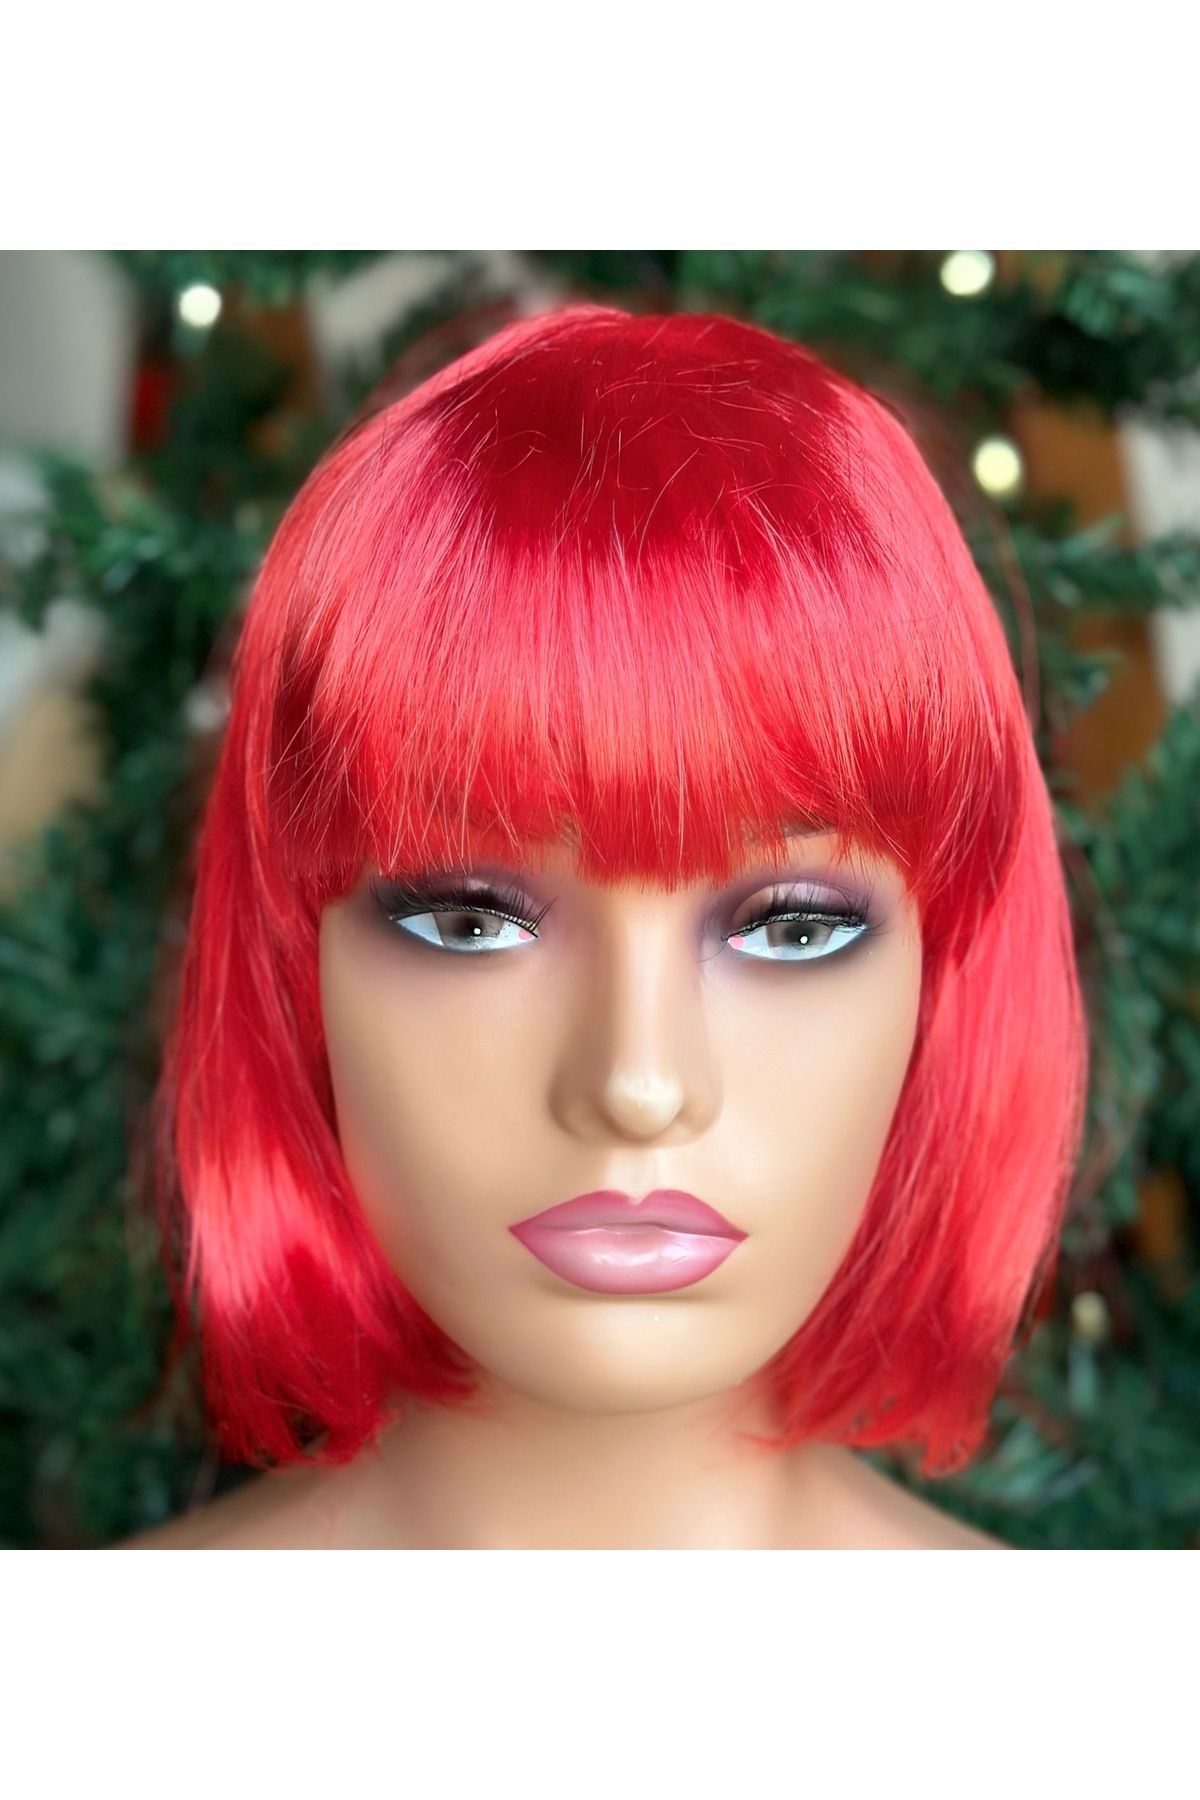 QUEEN AKSESUAR Deniz kızı Parti doğum günü kostüm barbie gösteri peruğu ayarlanır küt peruk saç kırmızı